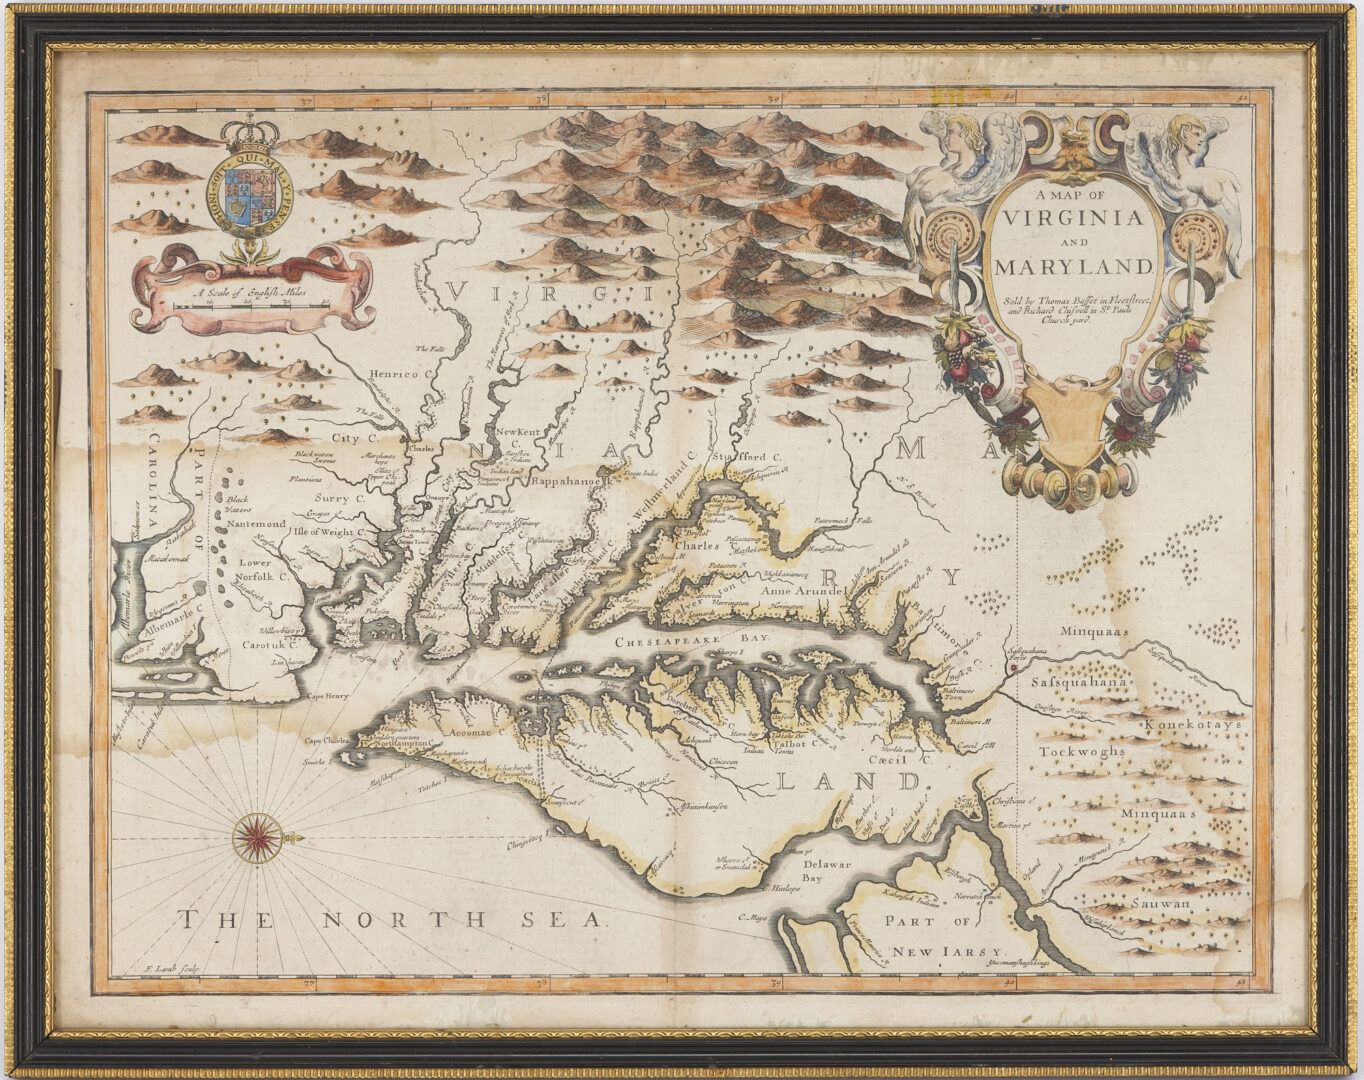 Lot 553: John Speed 1676 Map of Virginia, Maryland, and Chesapeake Bay